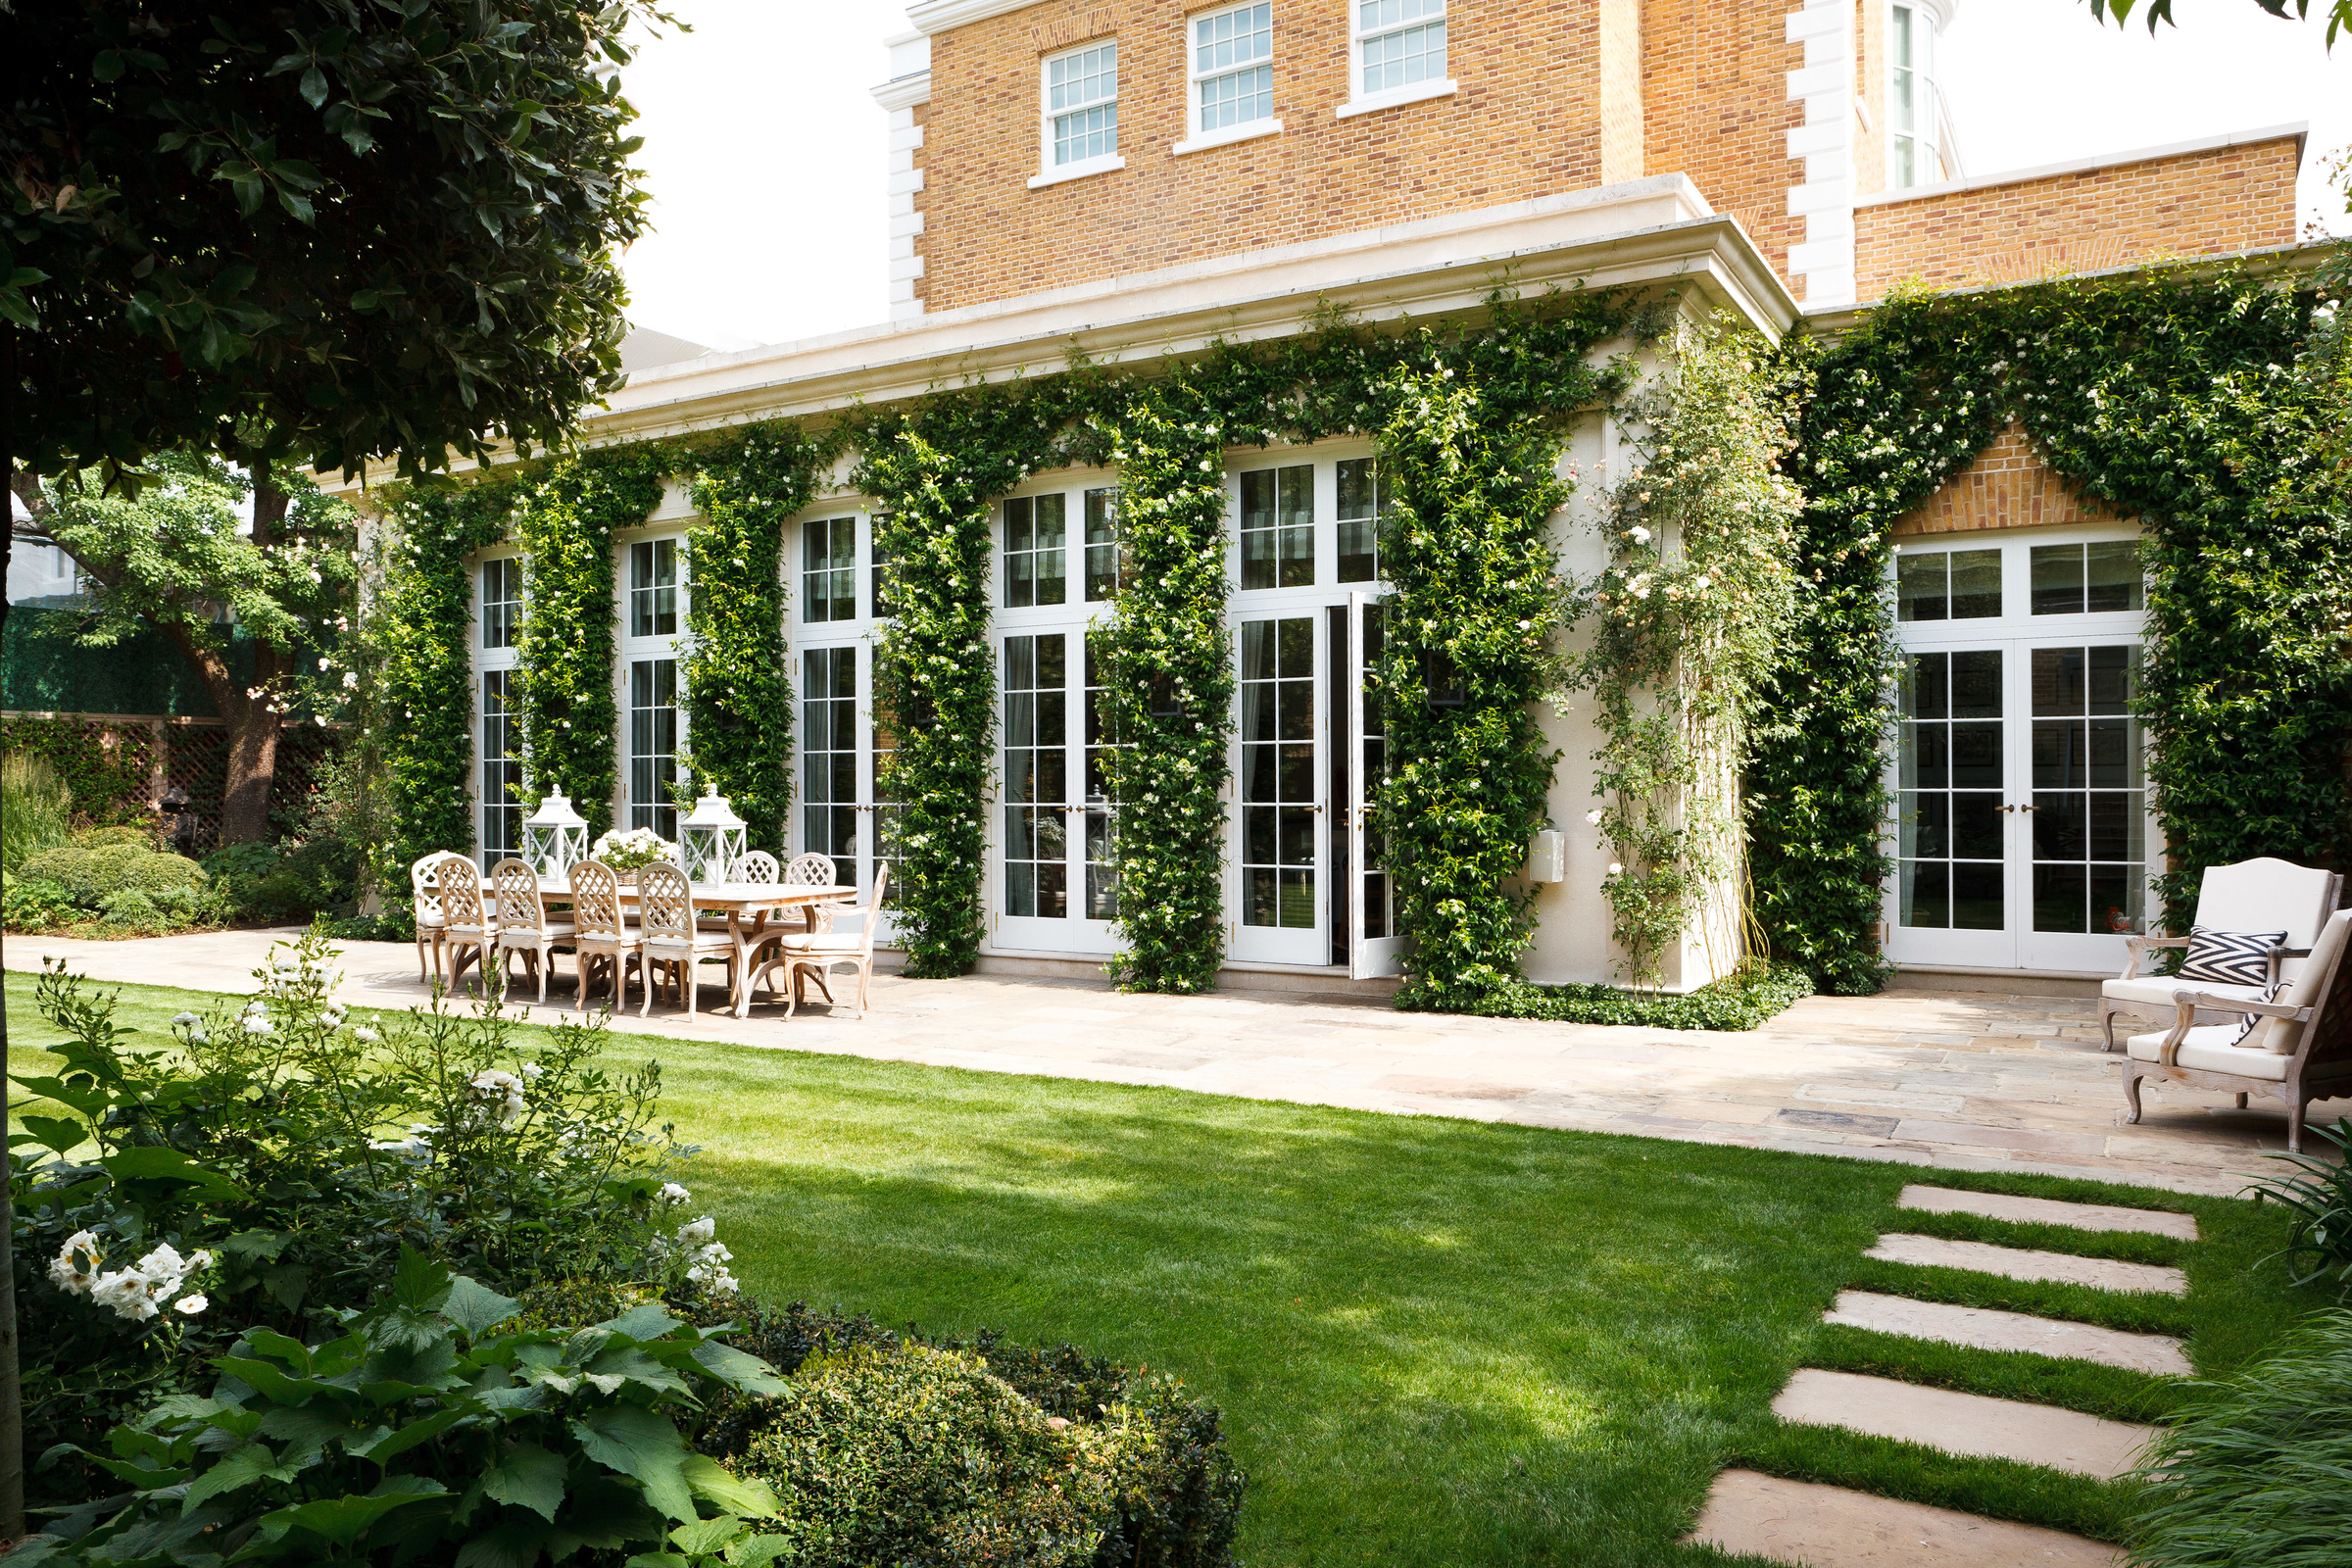 Landscaped garden by Randle Siddeley in Upper Phillimore Gardens, Kensington, London